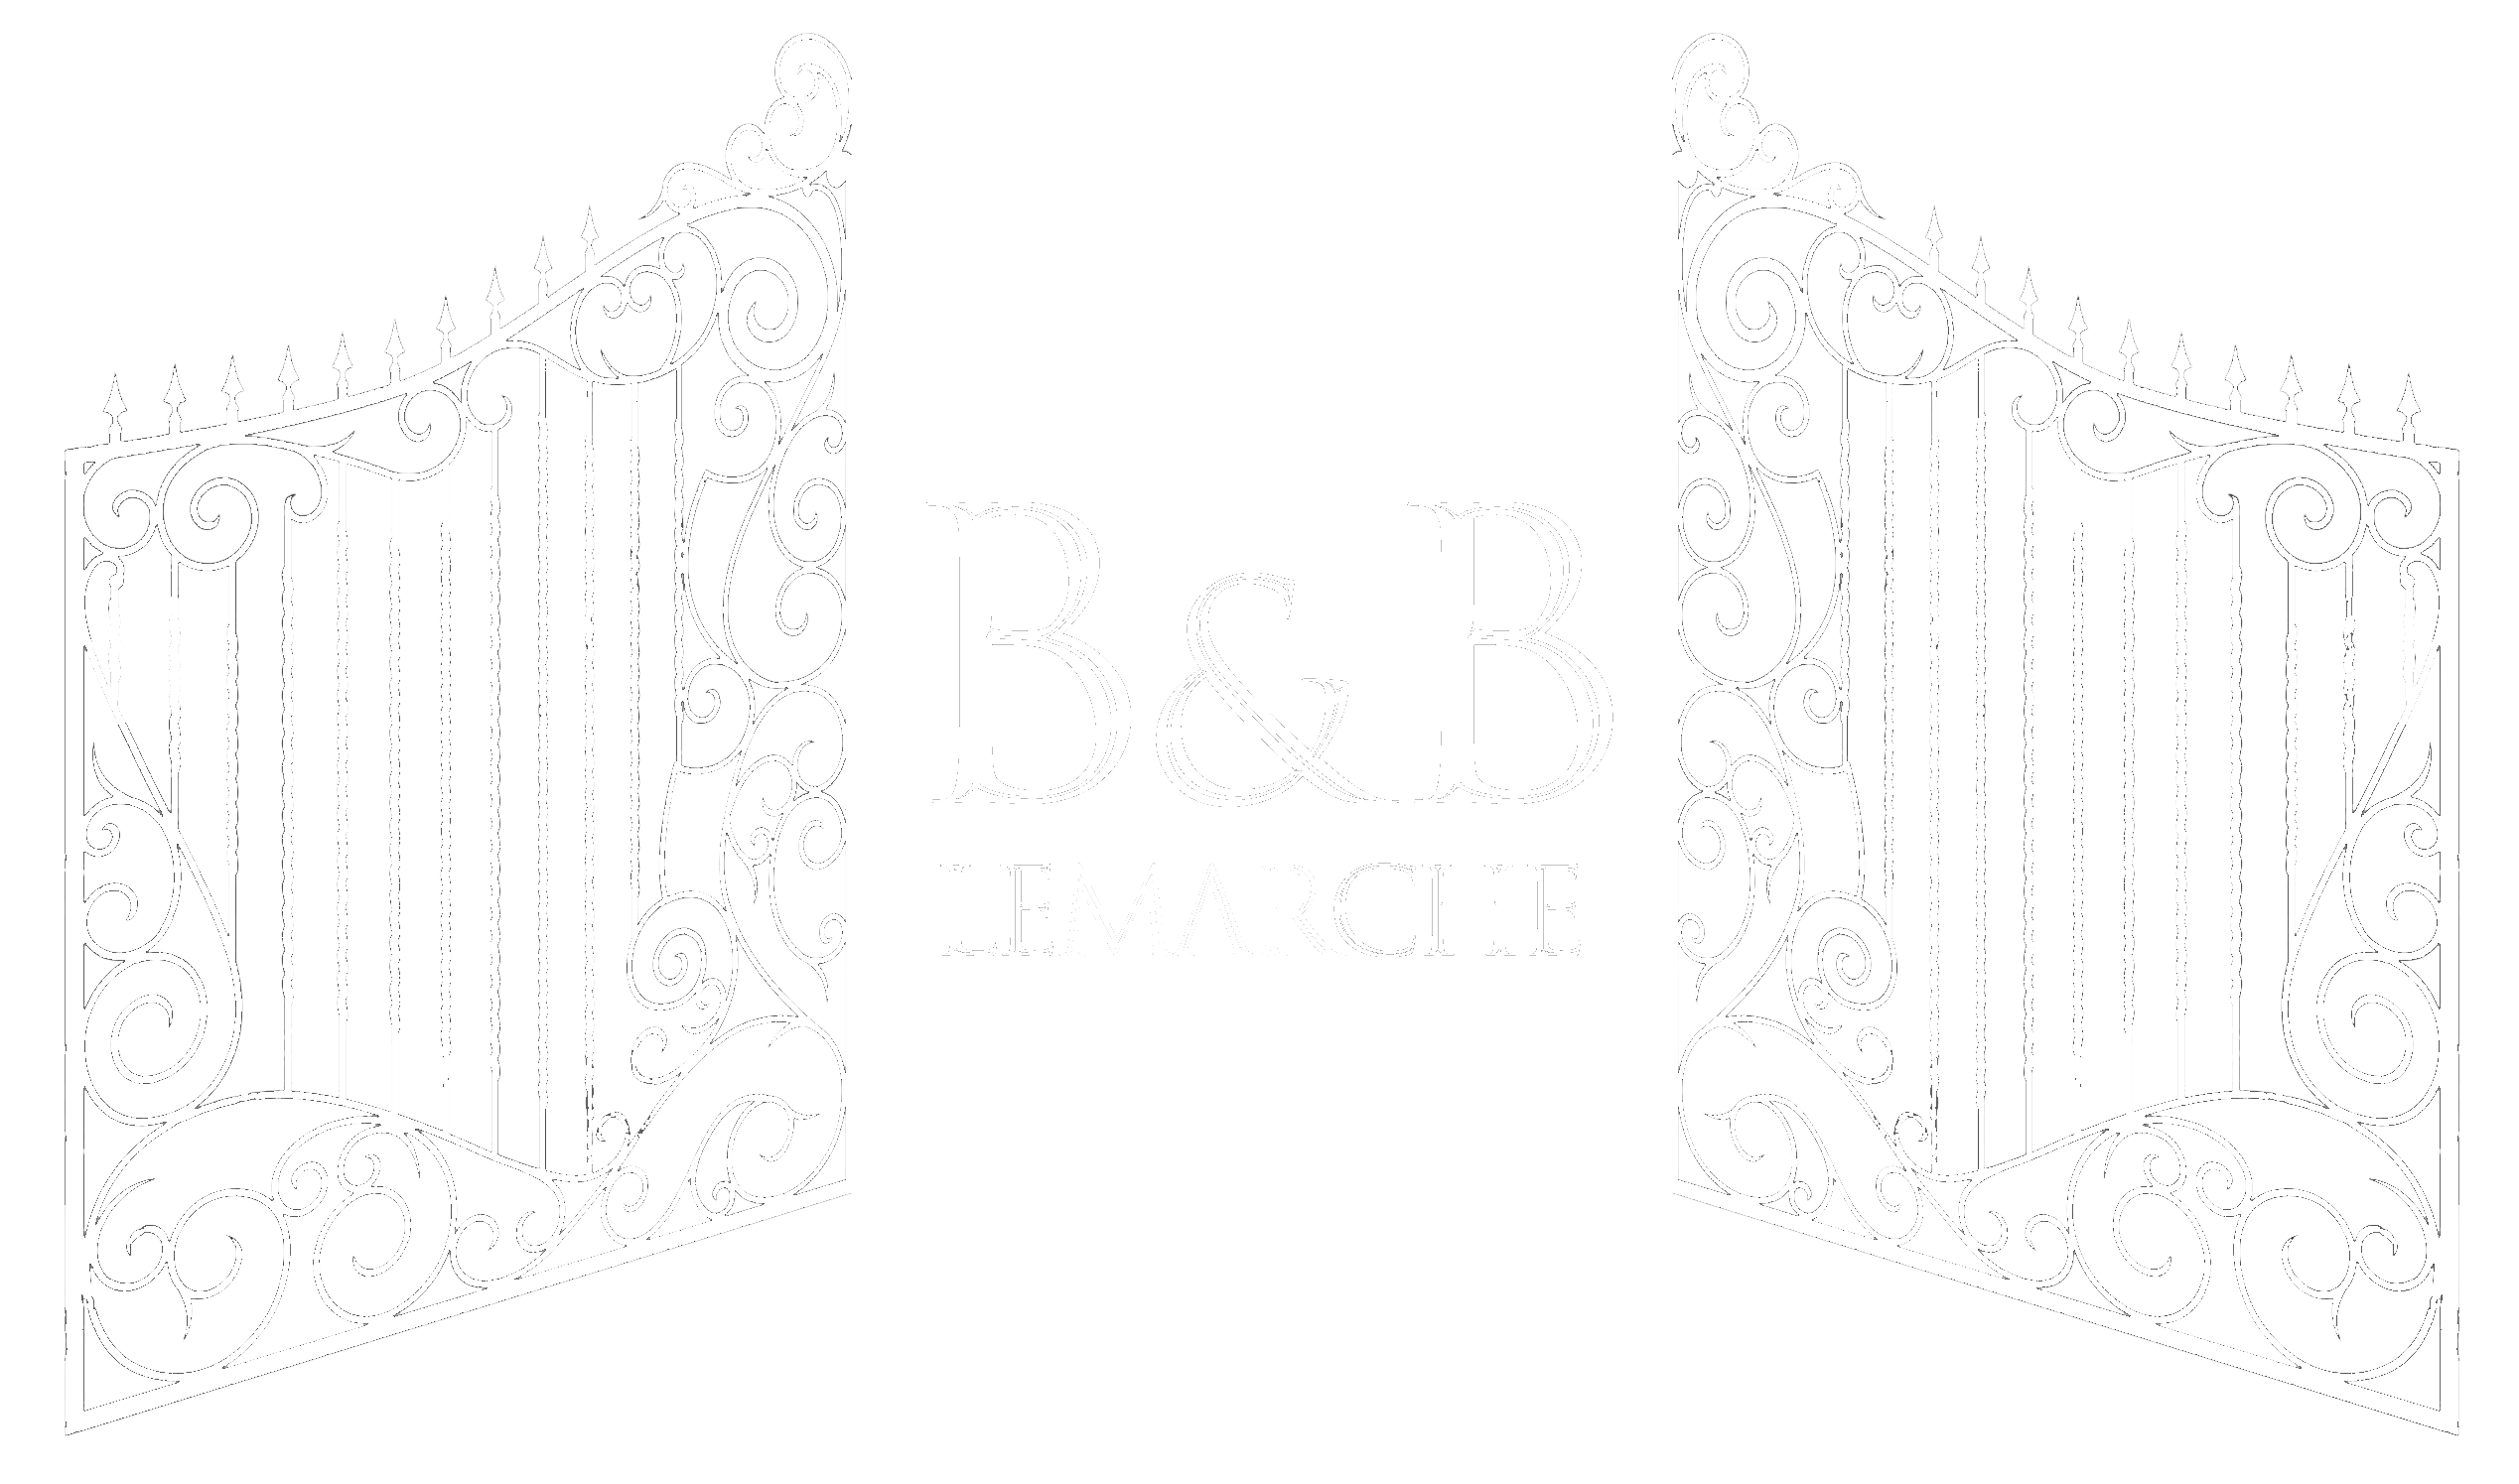 B&amp;B Lemarche gran marca blanca